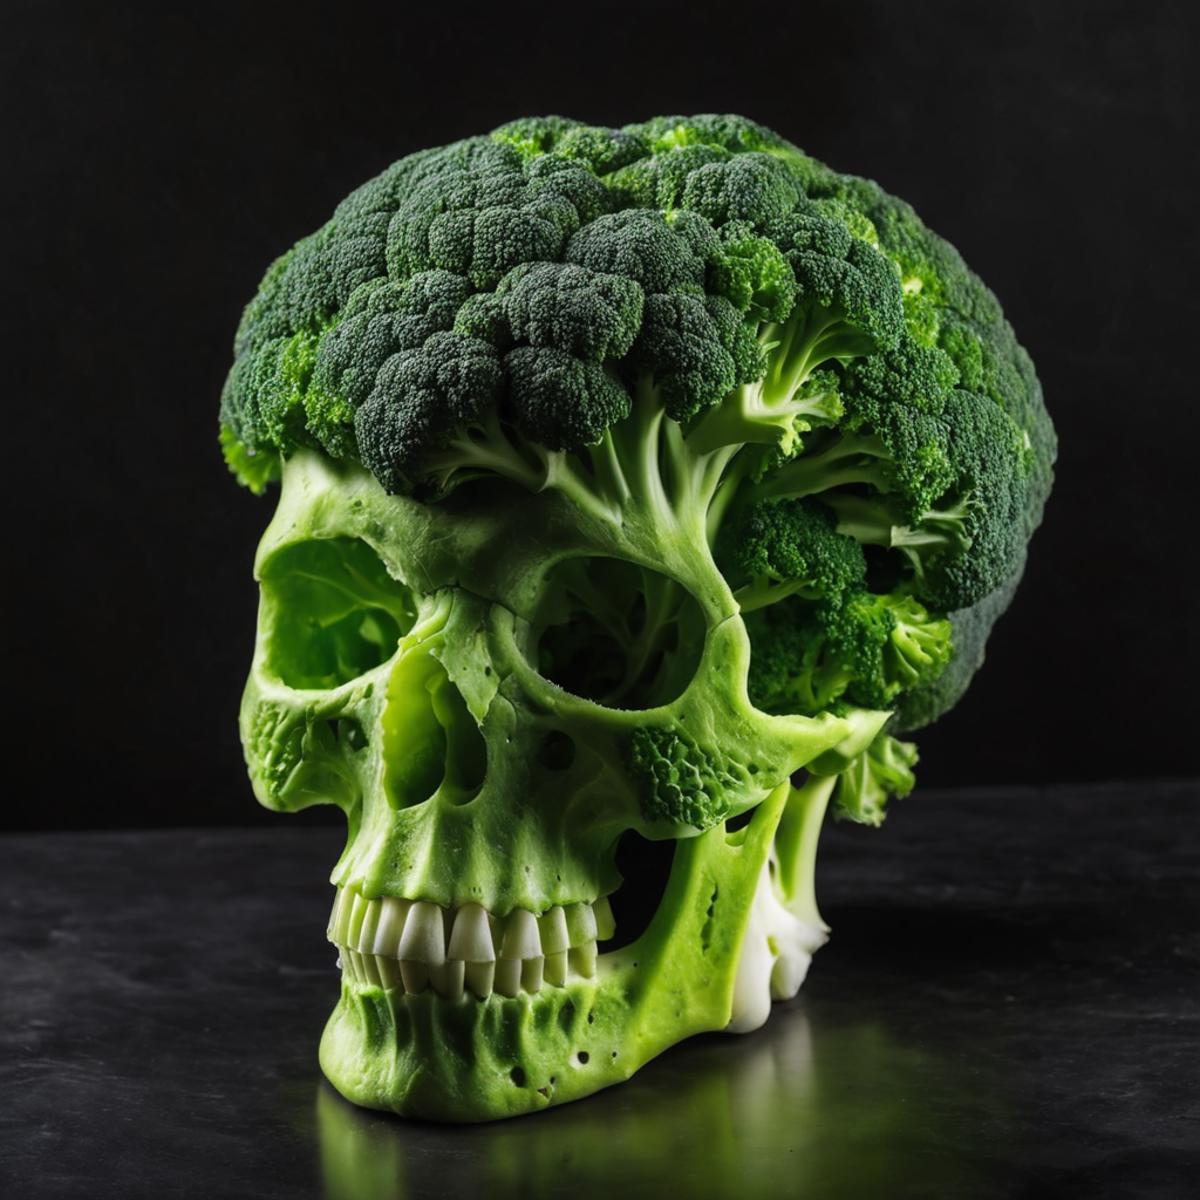 A skull made of broccoli.